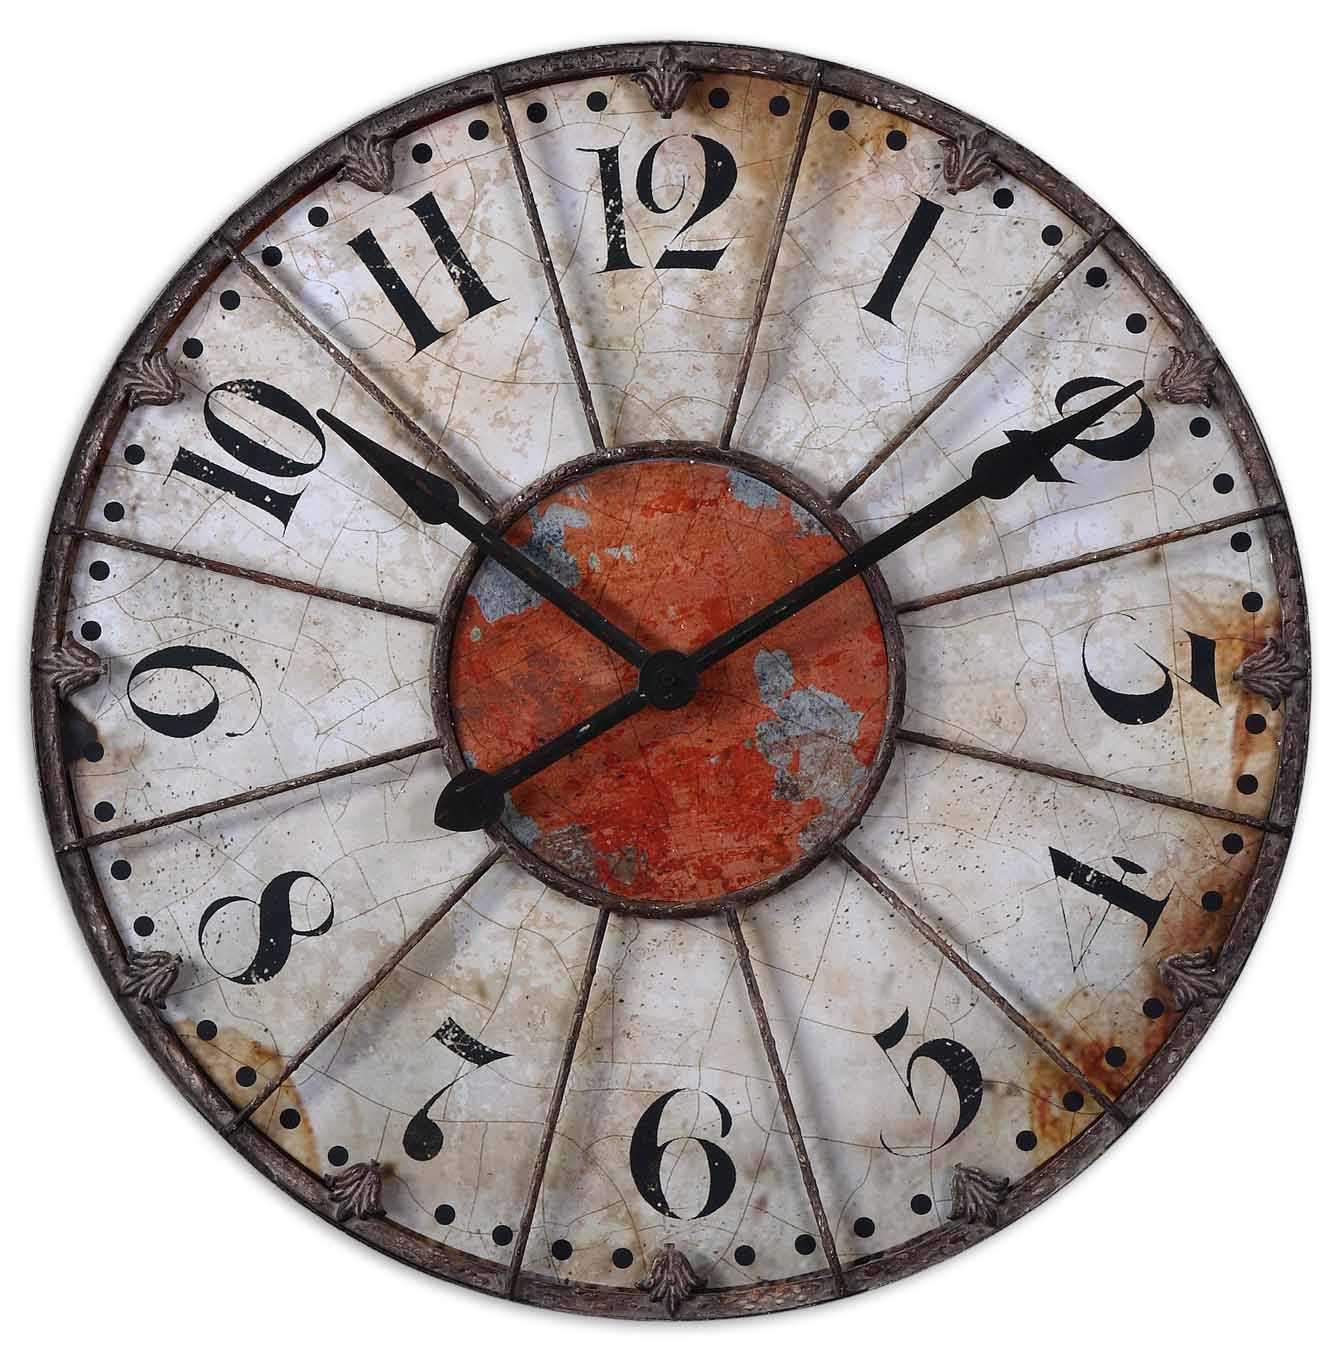 The Ellsworth Wall Clock